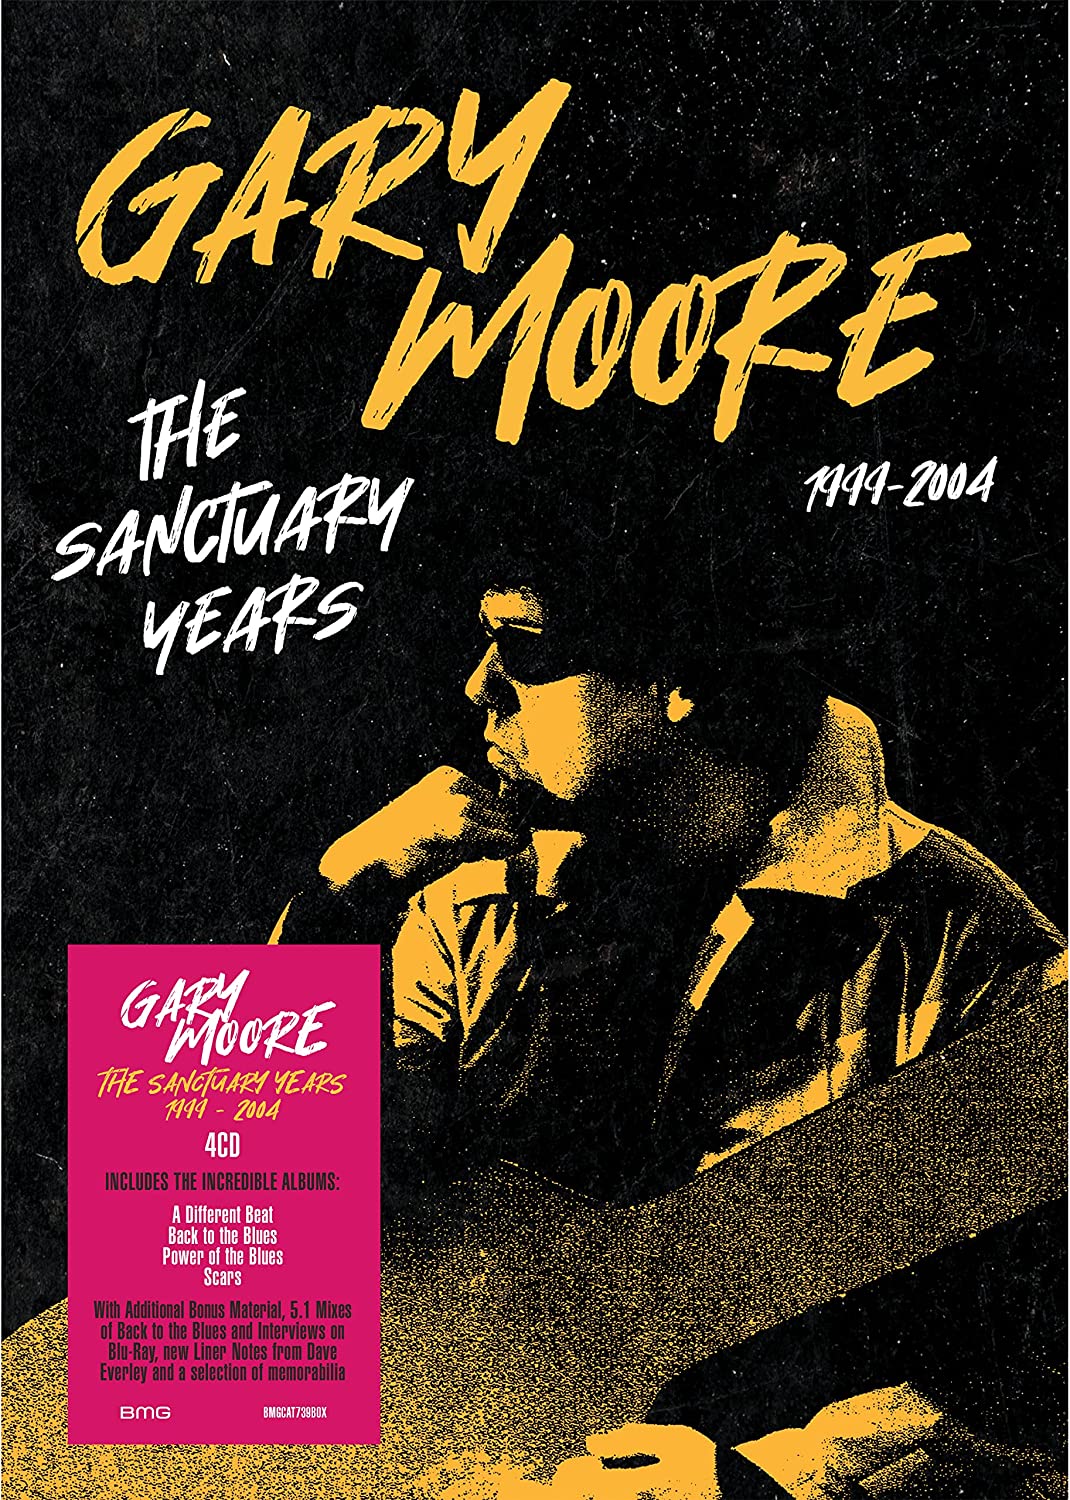 GARY MOORE - The Sanctuary Years 1999 - 2004 - 4CD and Blu-ray Box Set [JUN 23]